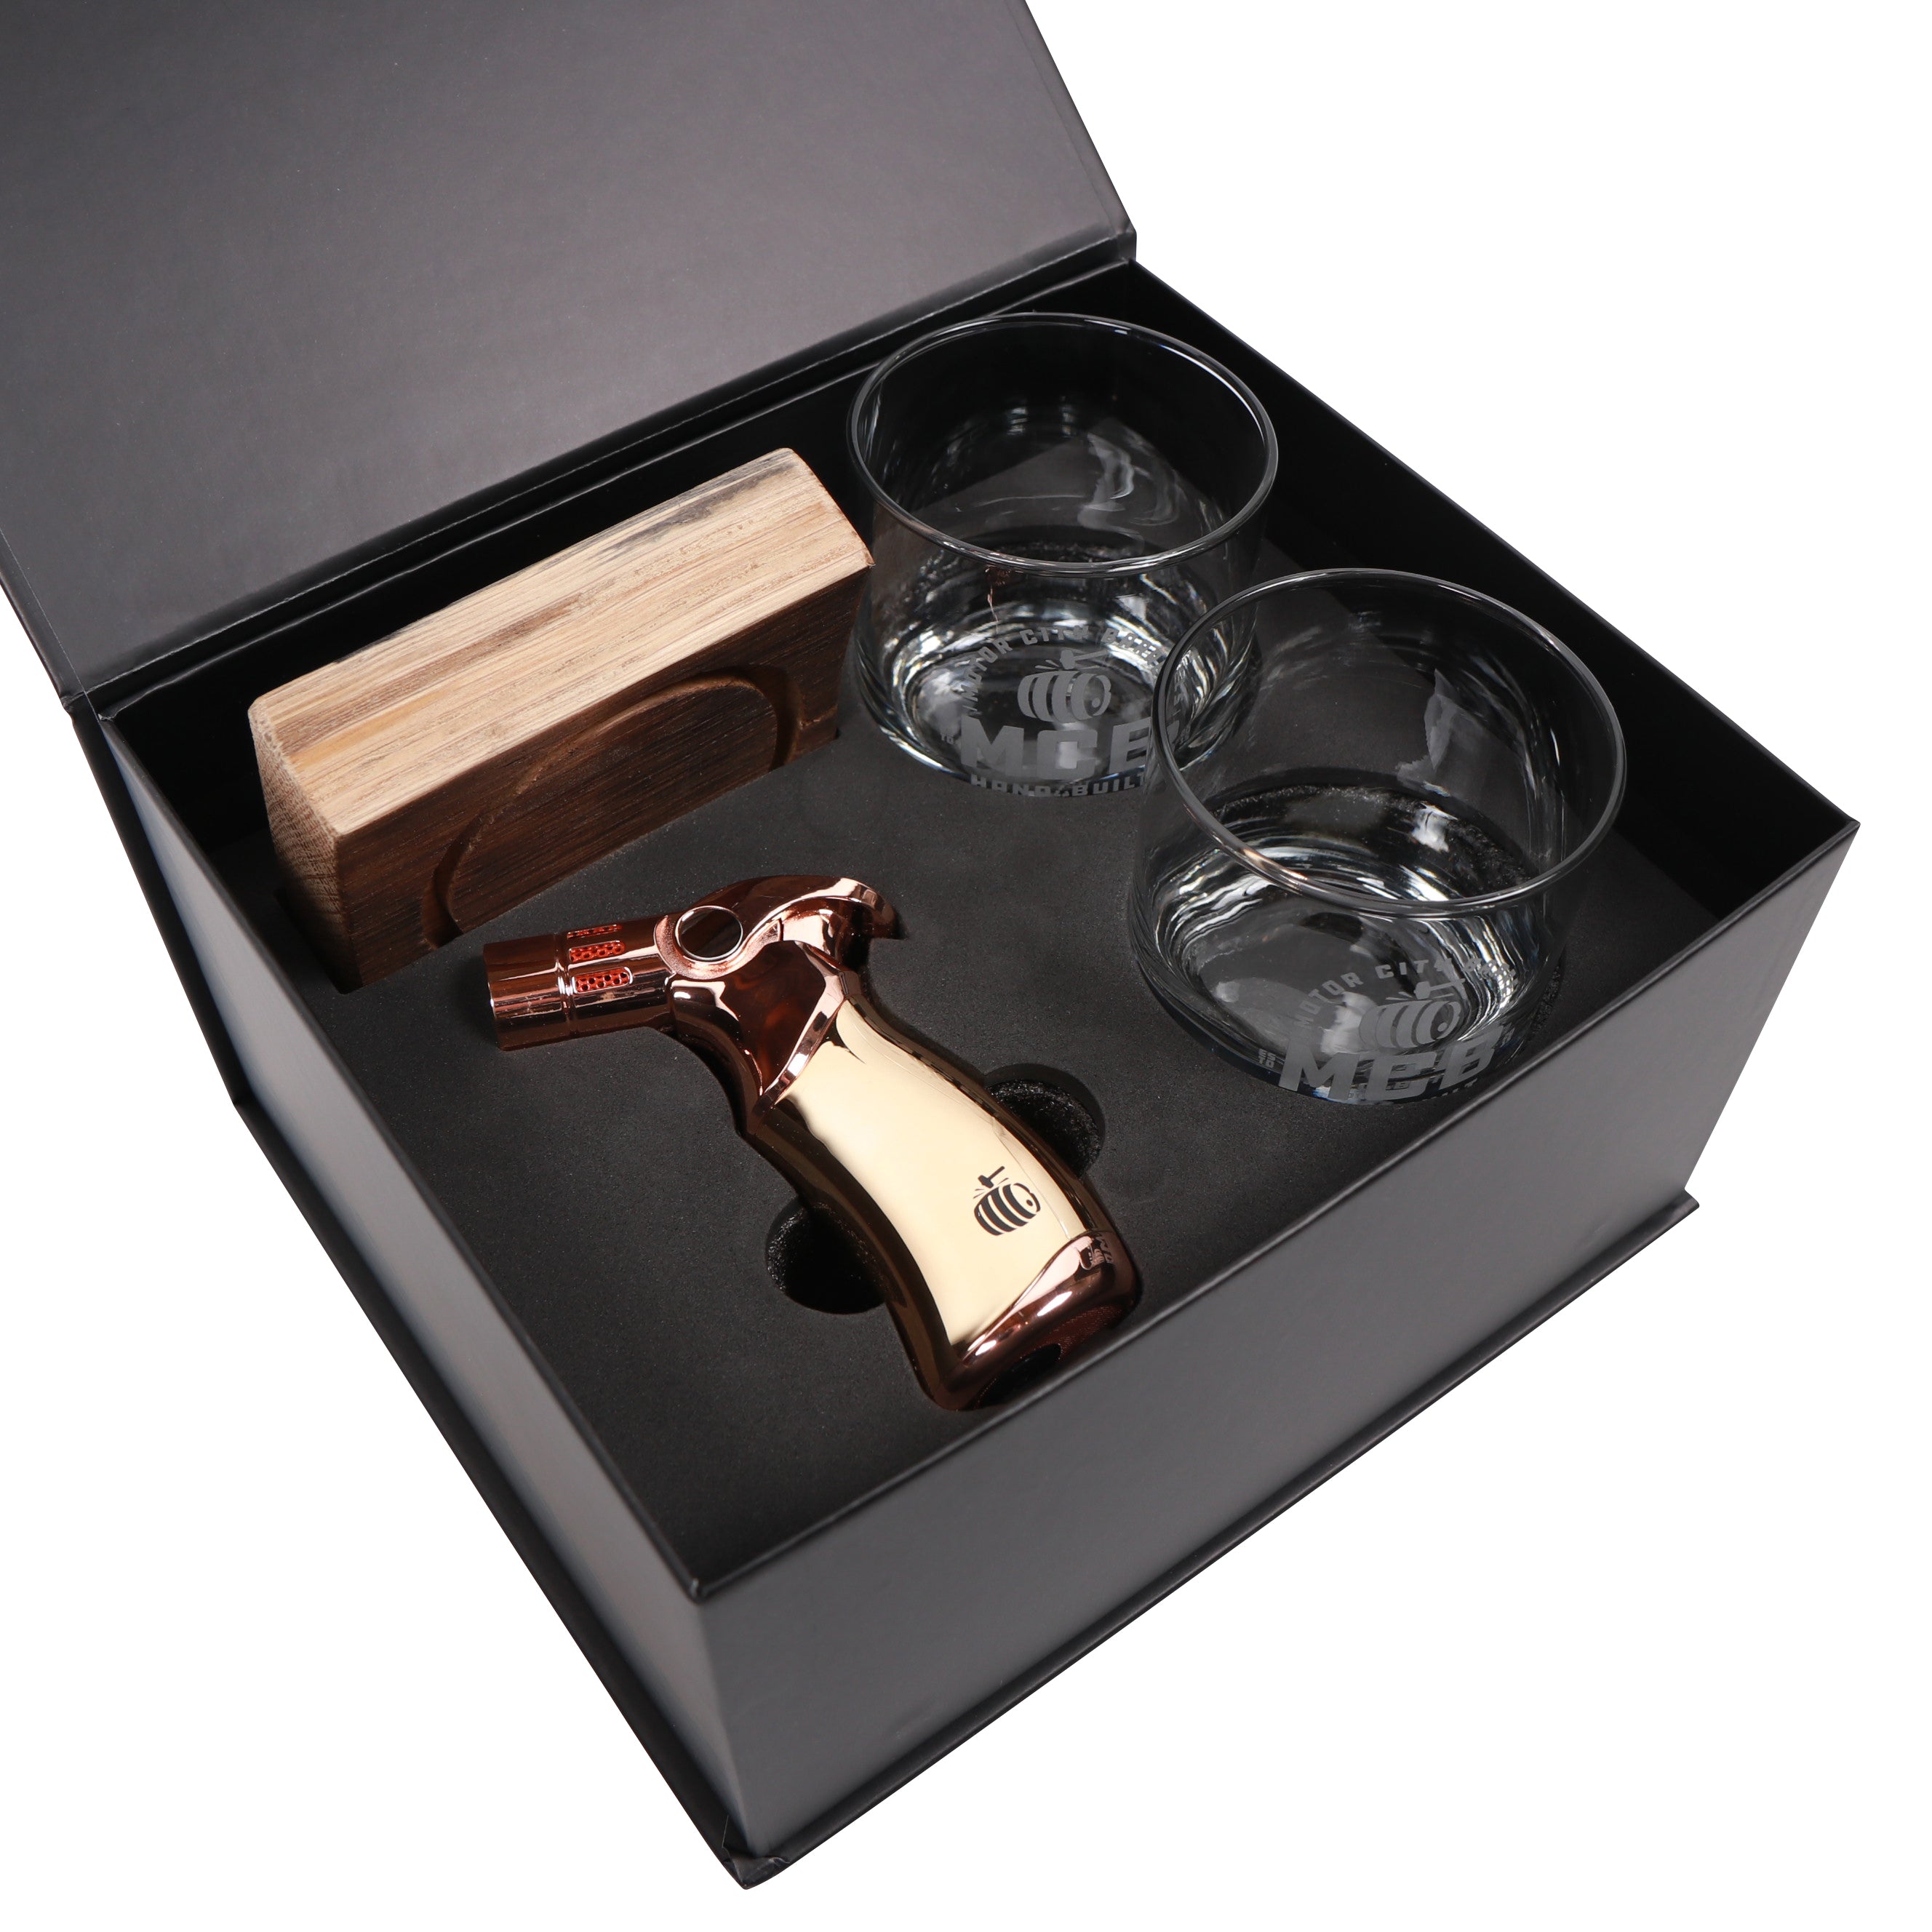 Whisky Aroma Kit - 24 Aroma Wooden Box